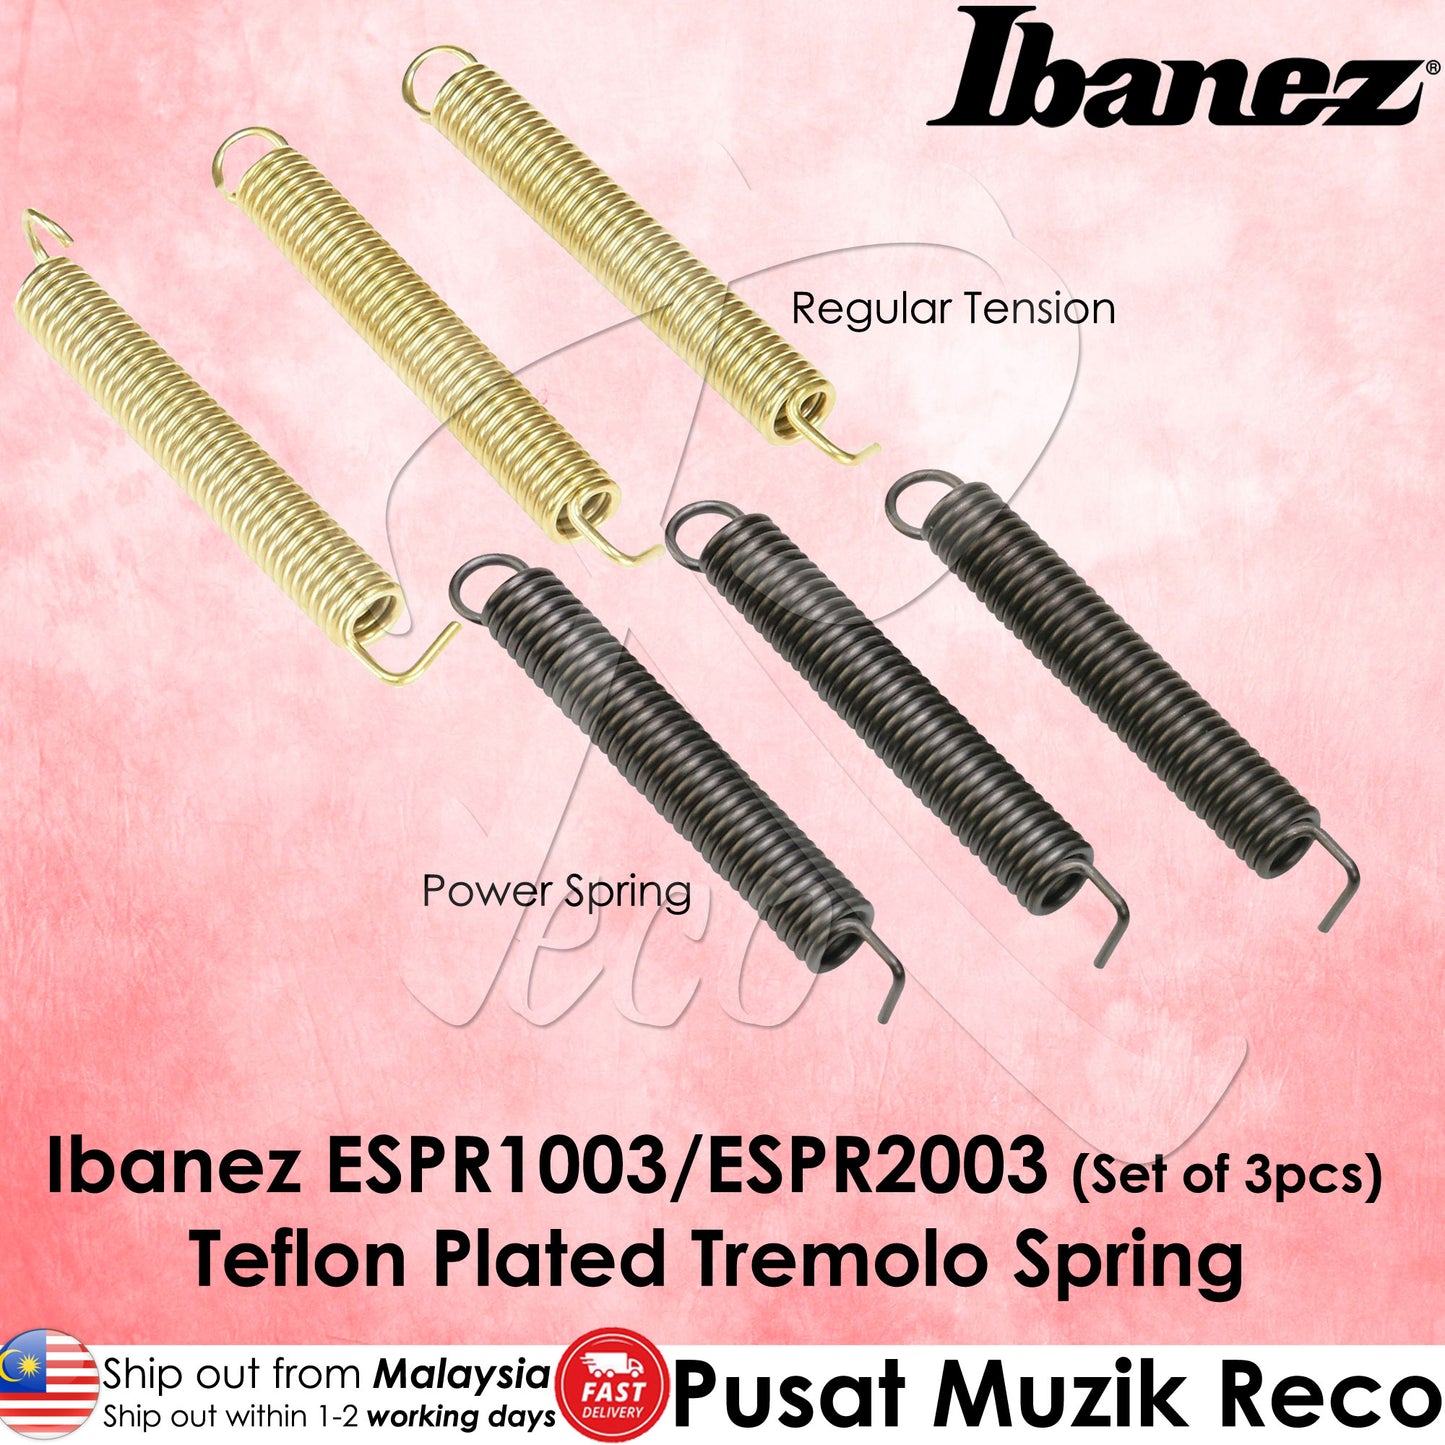 Ibanez E-POWER SPRING ESPR2003 Teflon Plated Edge Tremolo Spring, 3pcs